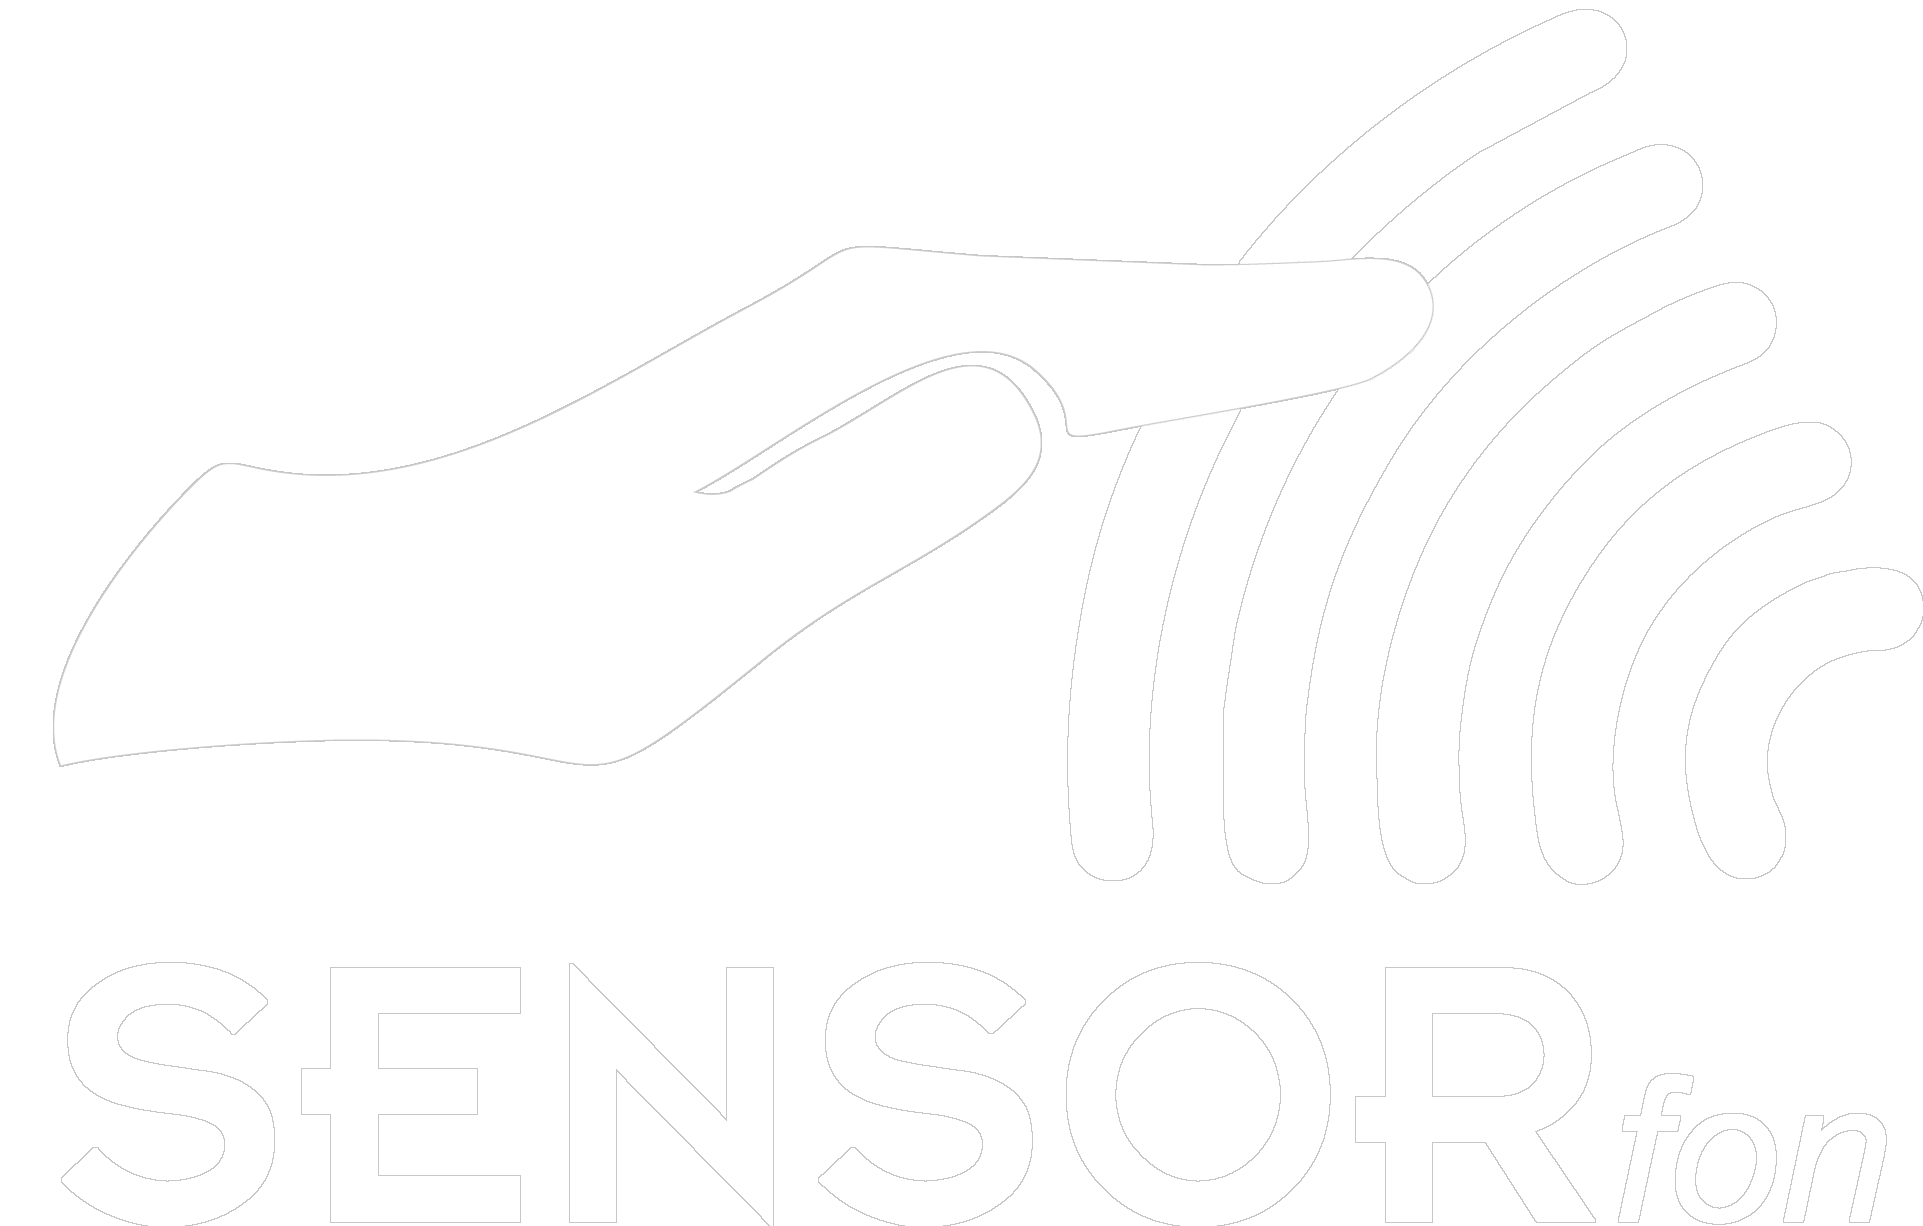 Logo_Sensorfon_weiß